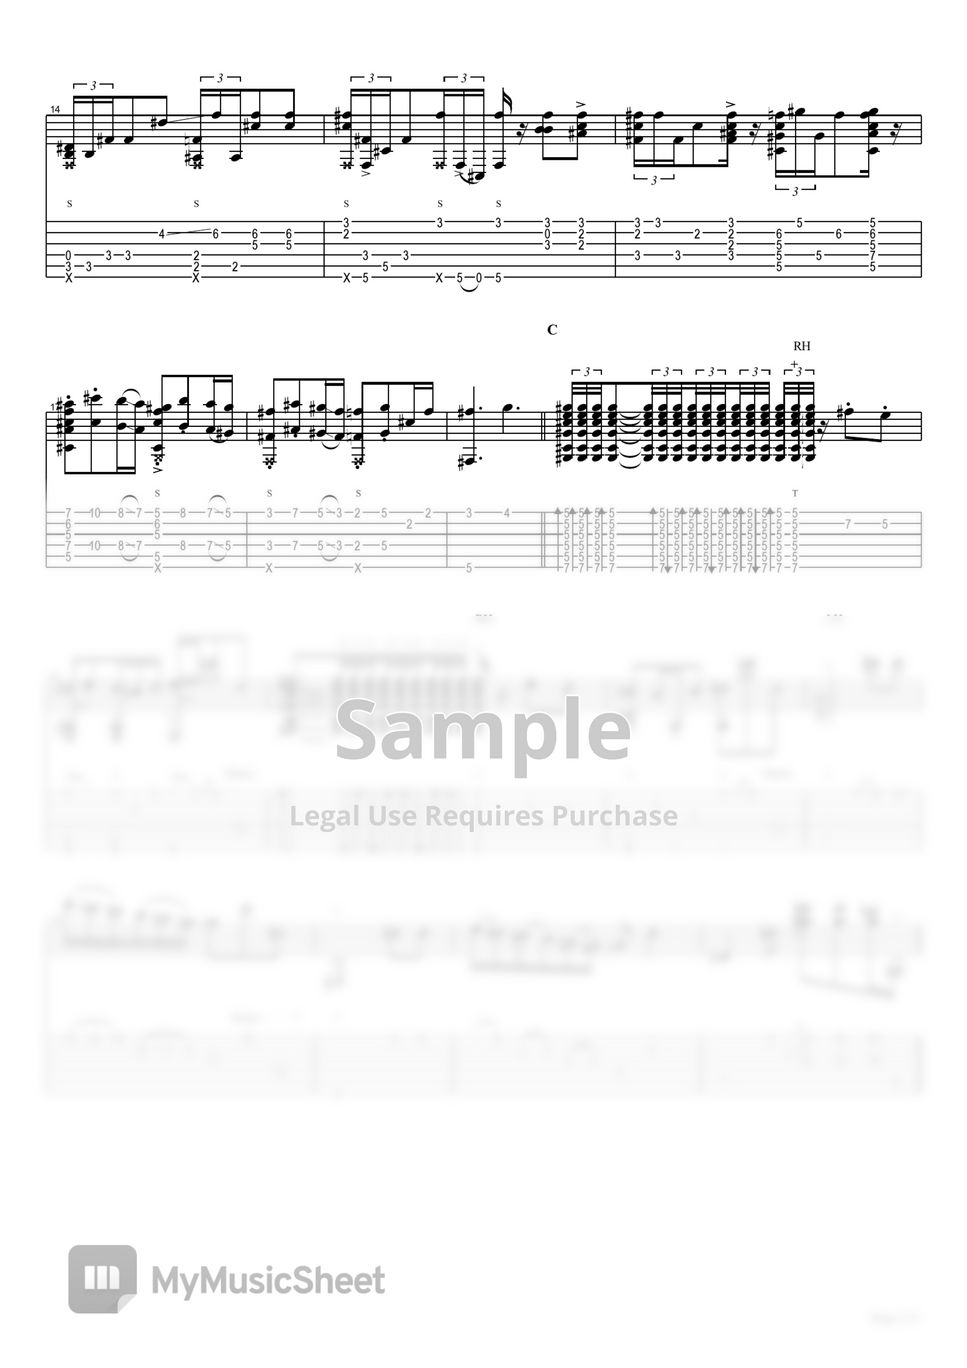 F.Liszt (리스트) - La Campanella (김재현 커버) (Guitar) by TaeHyun Taylor Lee